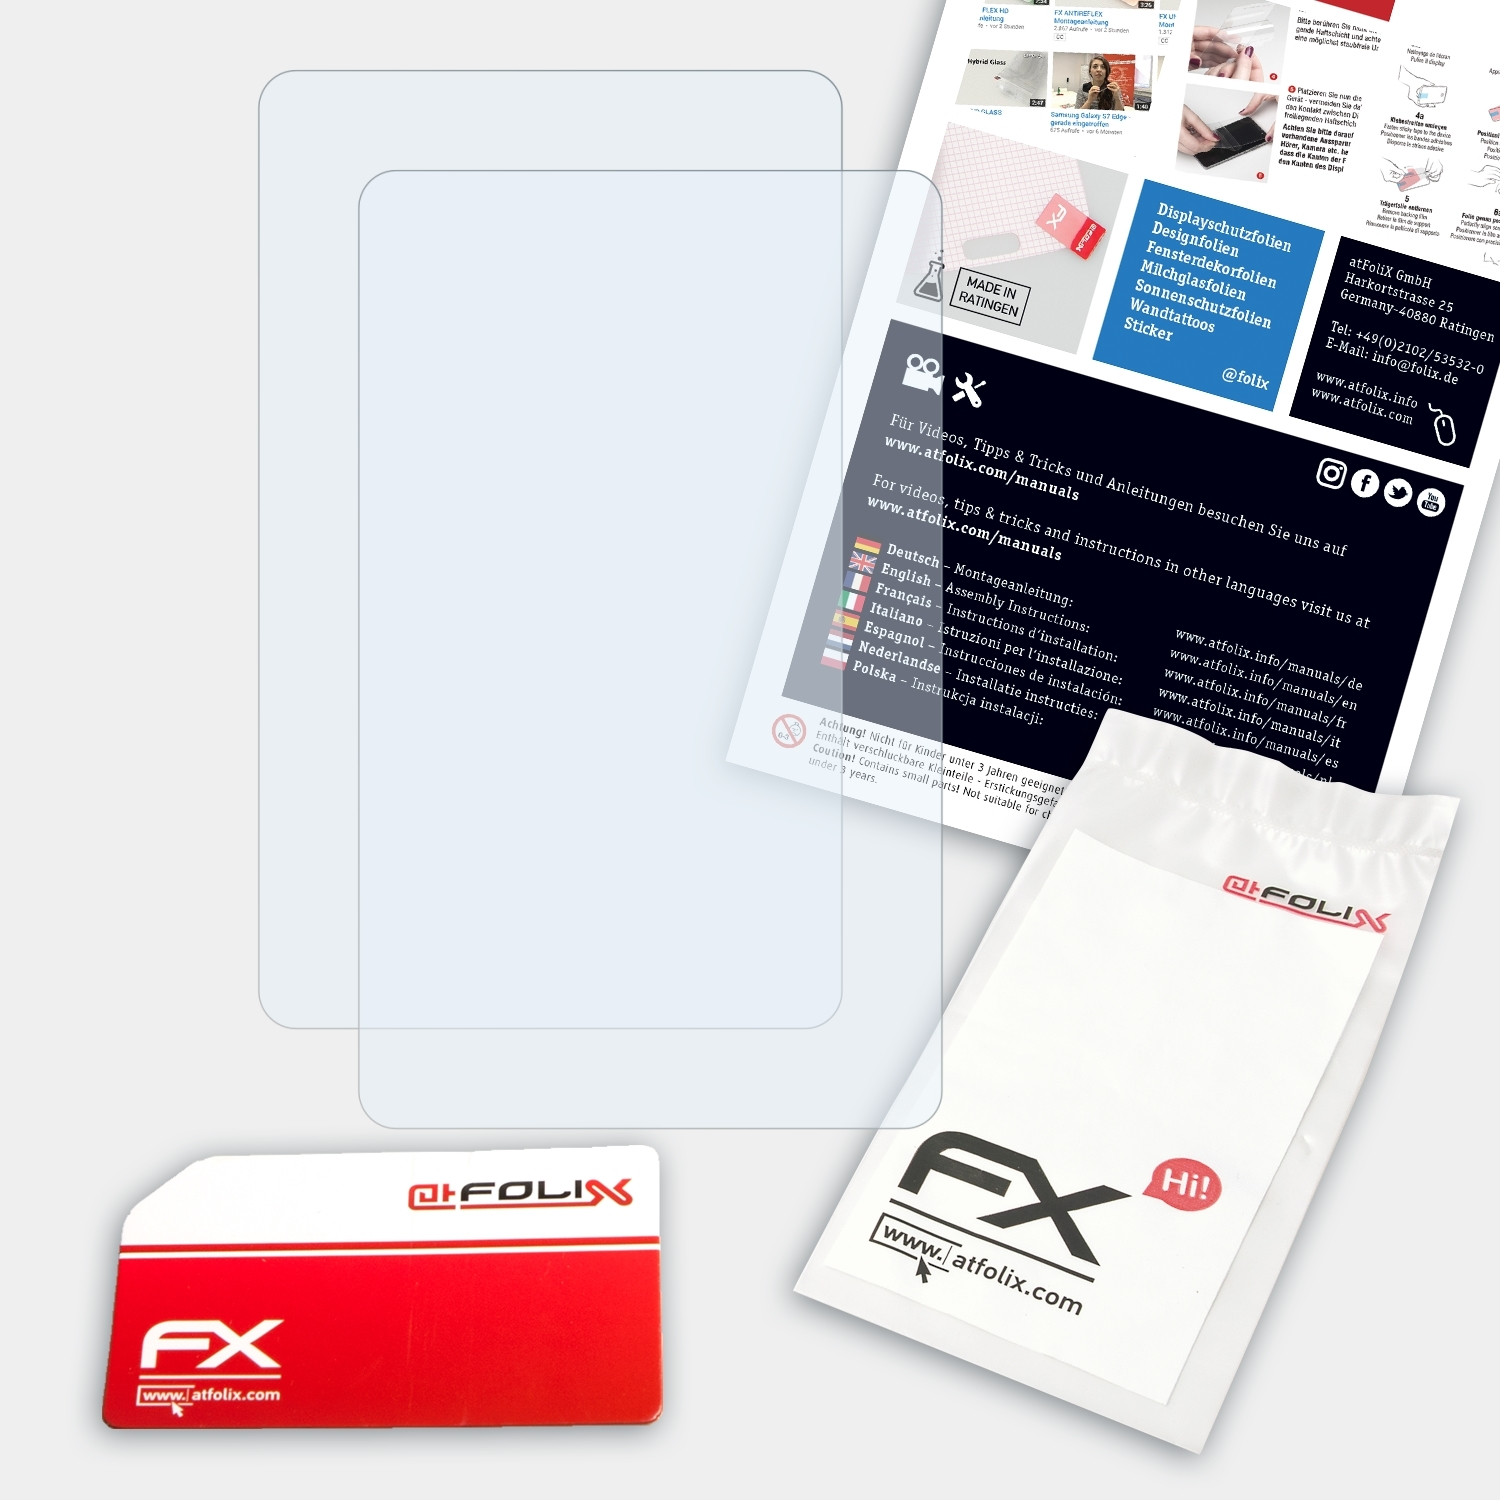 2x FX-Clear A50S) Pax ATFOLIX Displayschutz(für